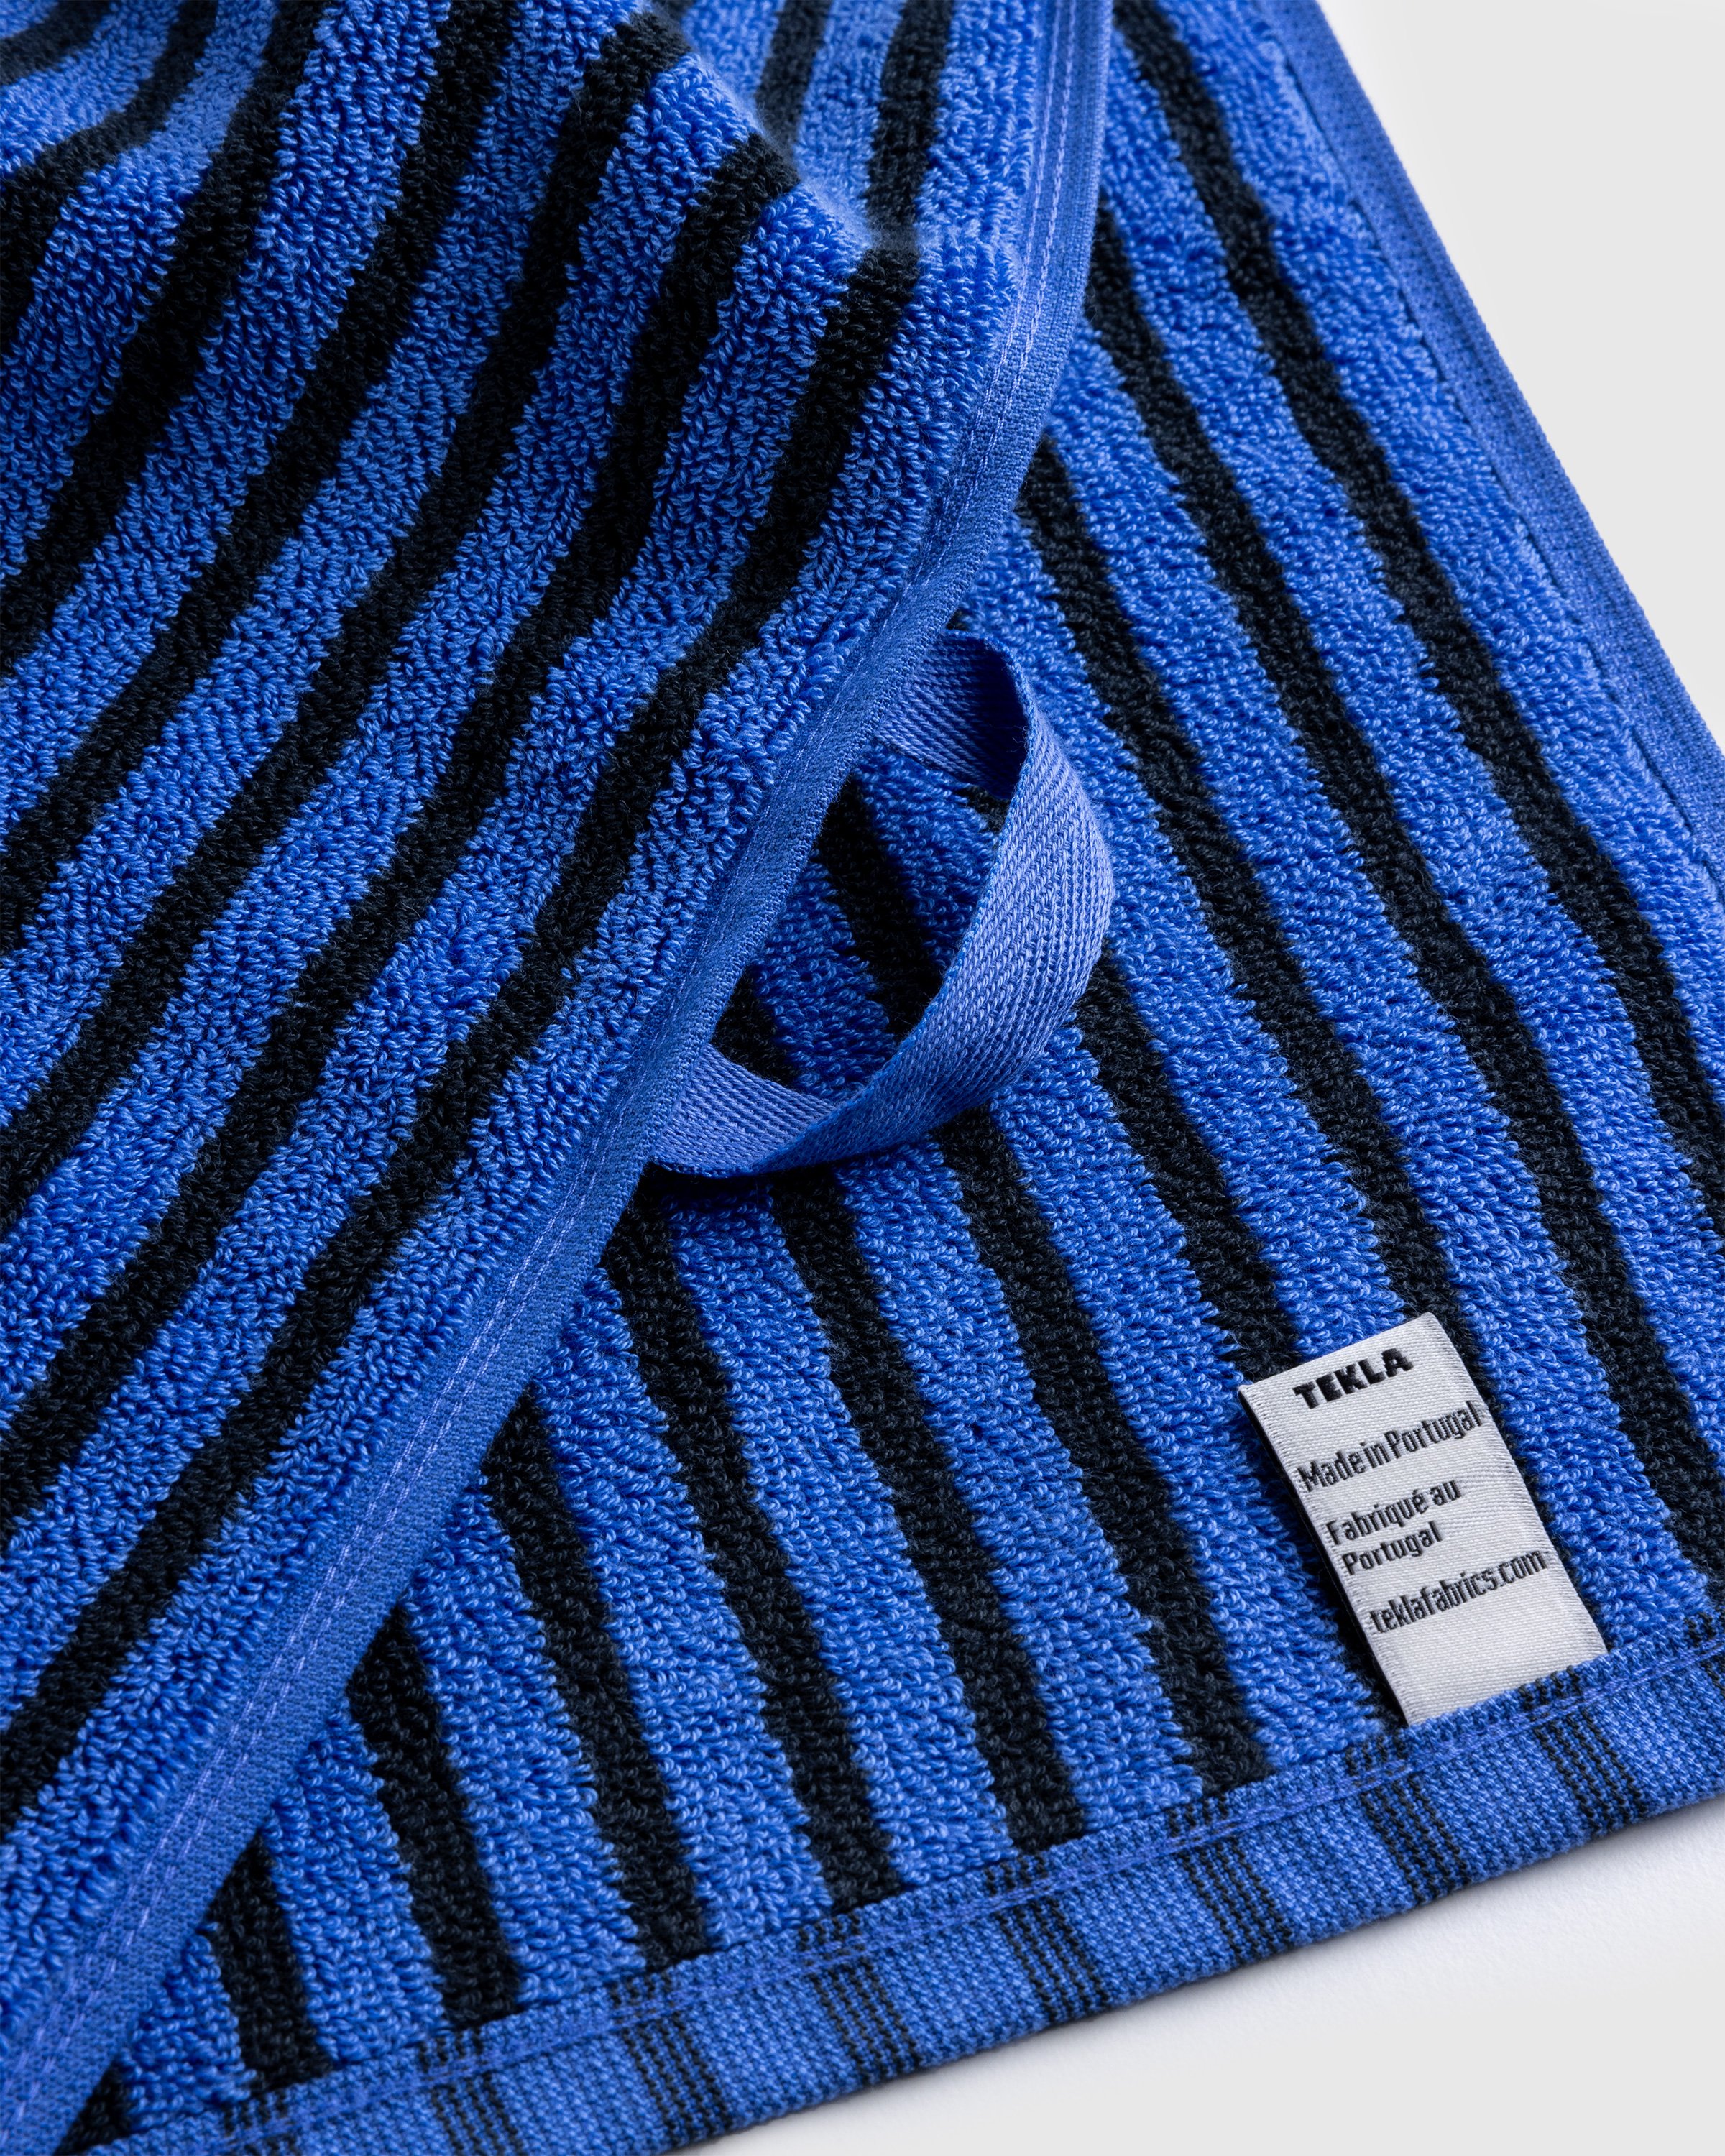 Tekla - Bath Towel Blue&Black - Lifestyle - Blue - Image 4